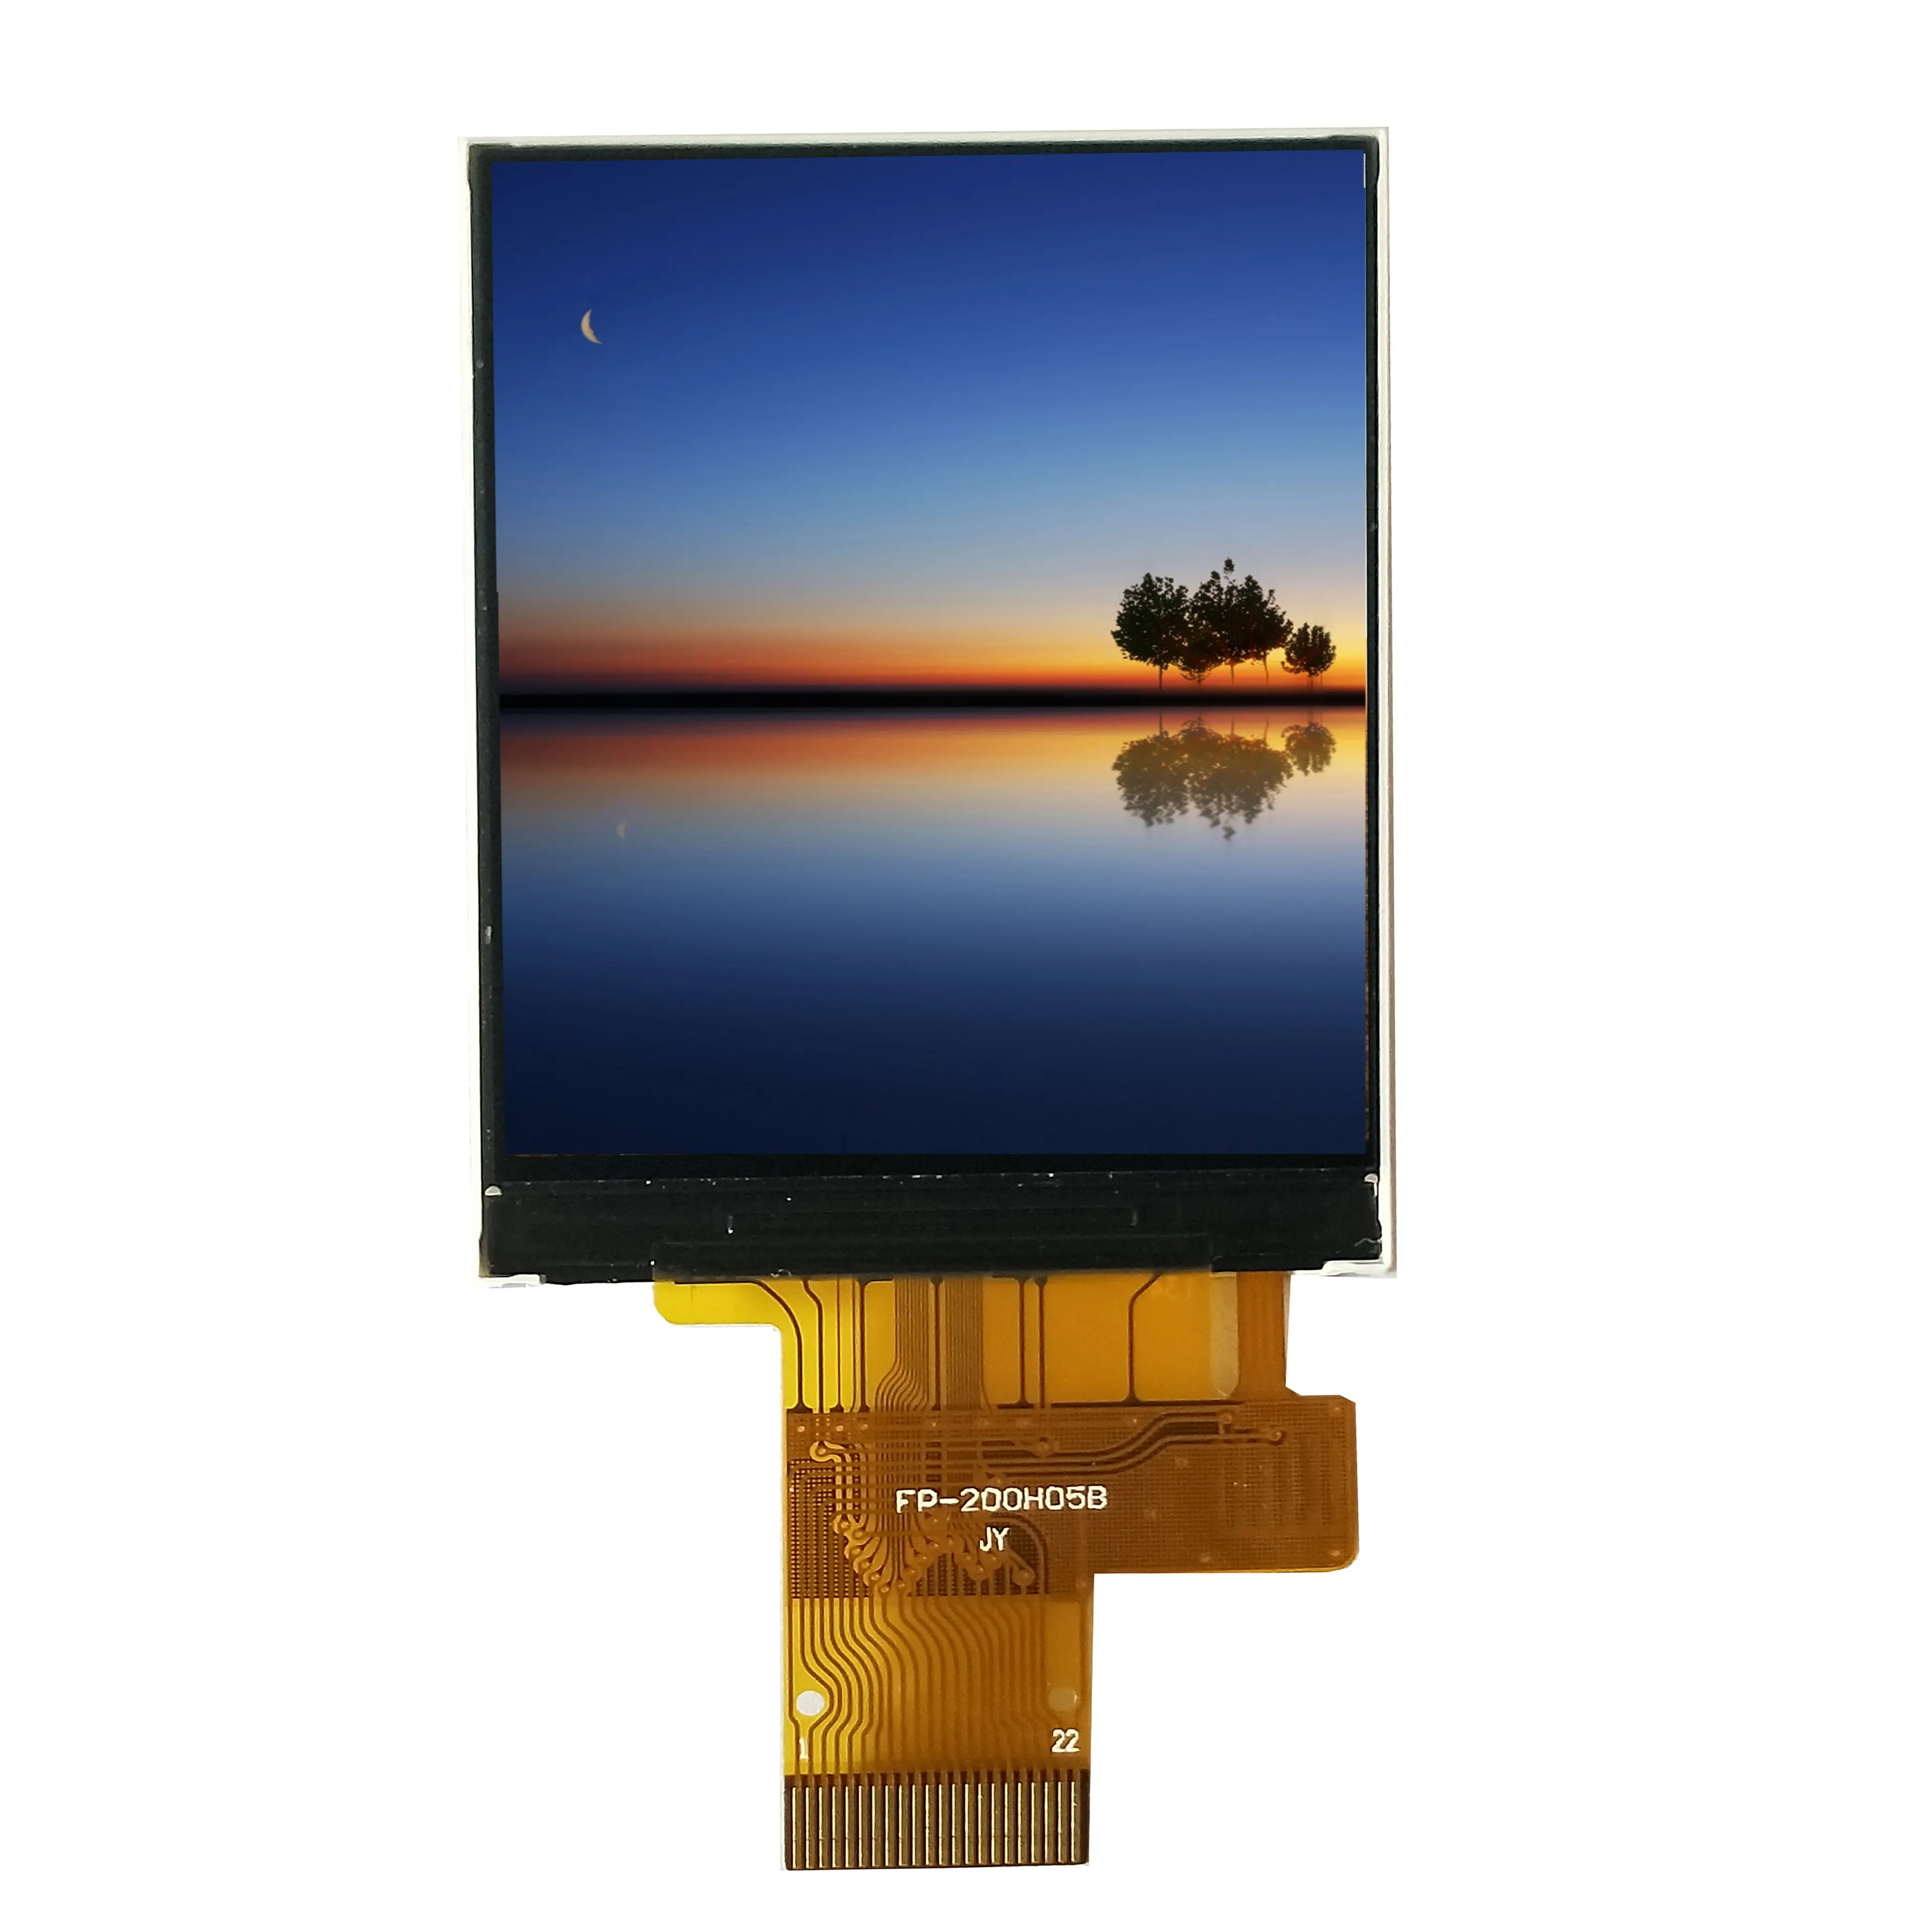 2 "22 PIN IPS TFT LCD โมดูล 240x320 TFT หน้าจอ